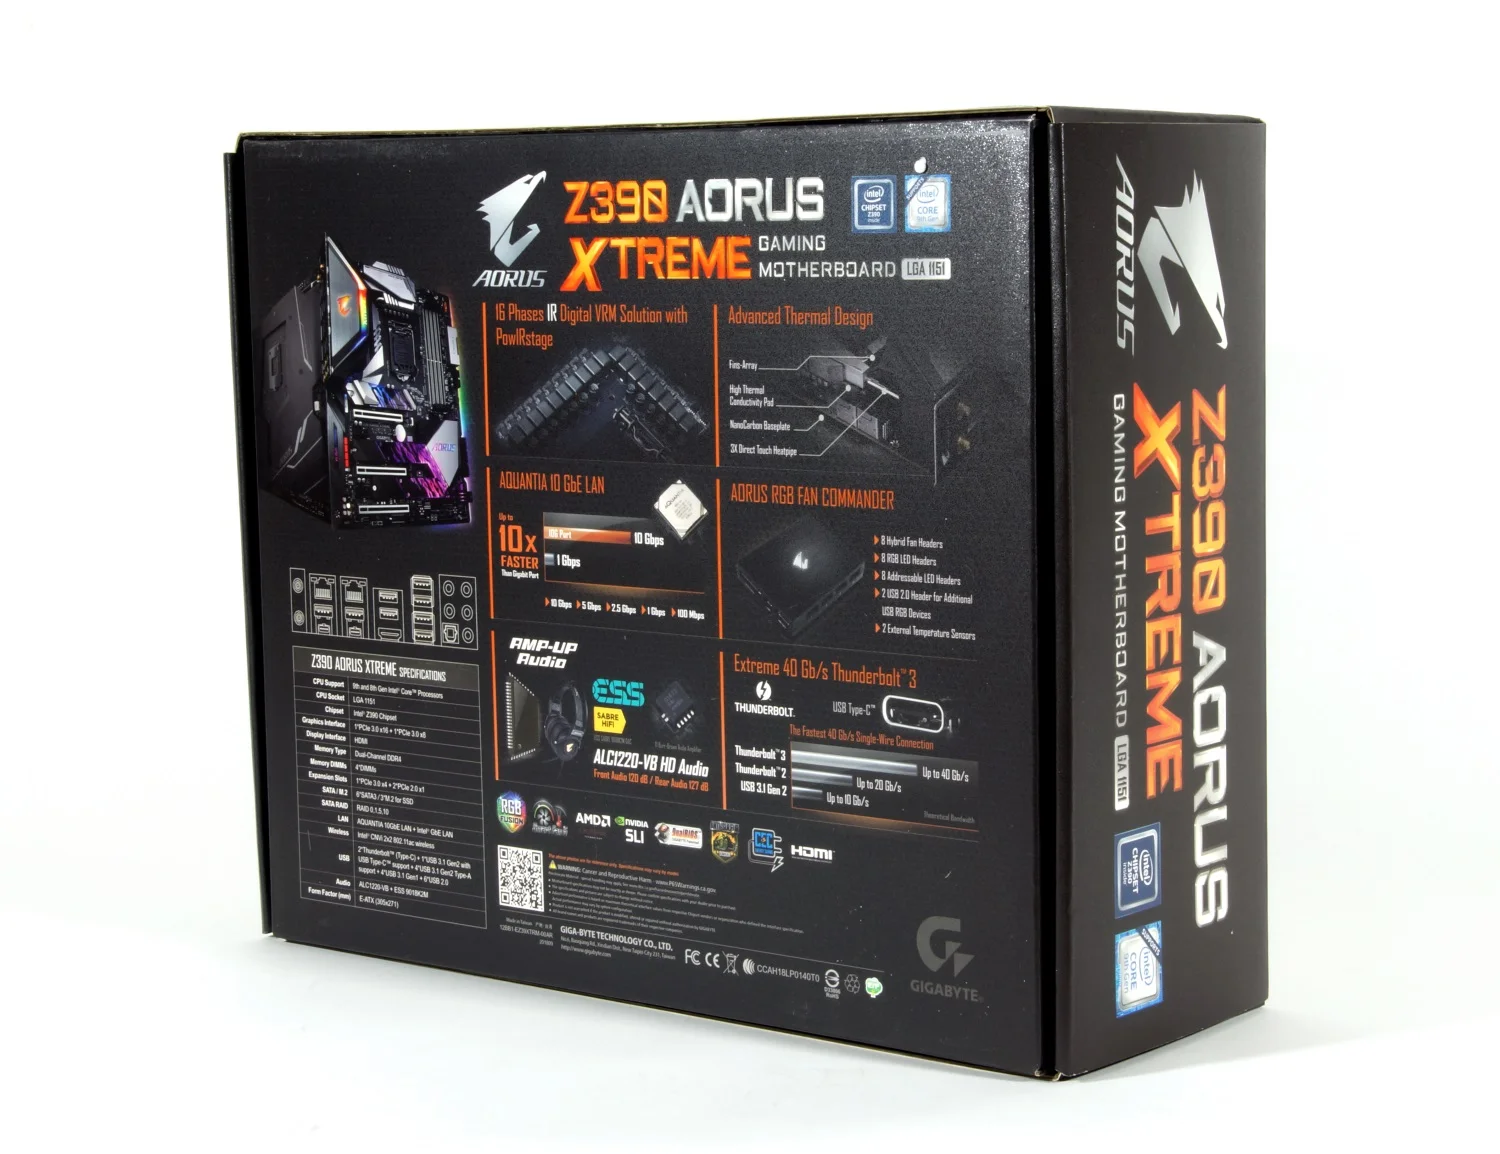 Тестируем видеокарту GeForce RTX 2080 Ti AORUS Xtreme и материнскую плату GIGABYTE Z390 AORUS Xtreme - фото 2